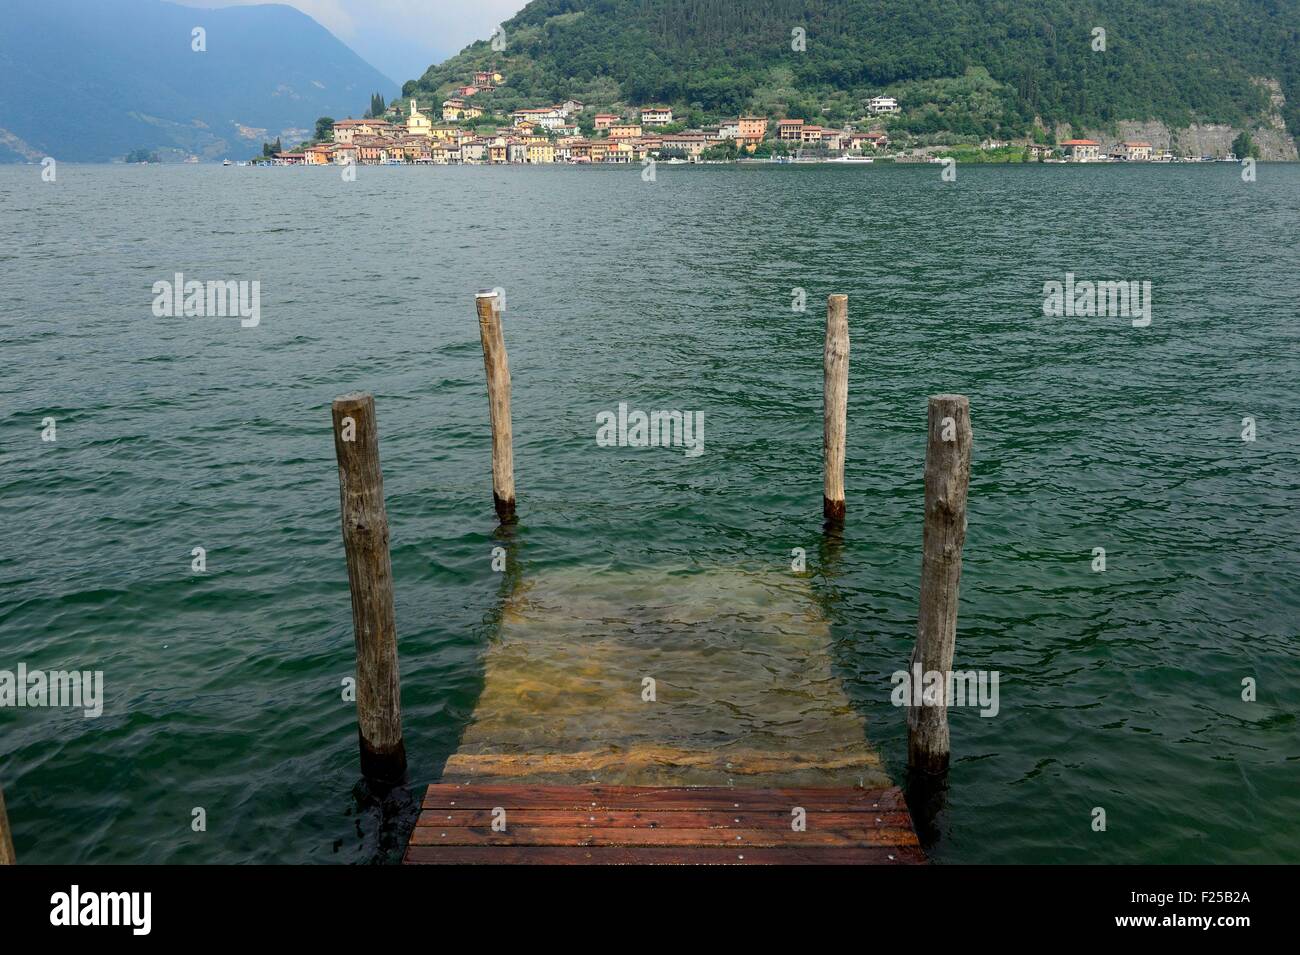 Italy, Lombardy, Iseo lake, Monte Isola island Stock Photo